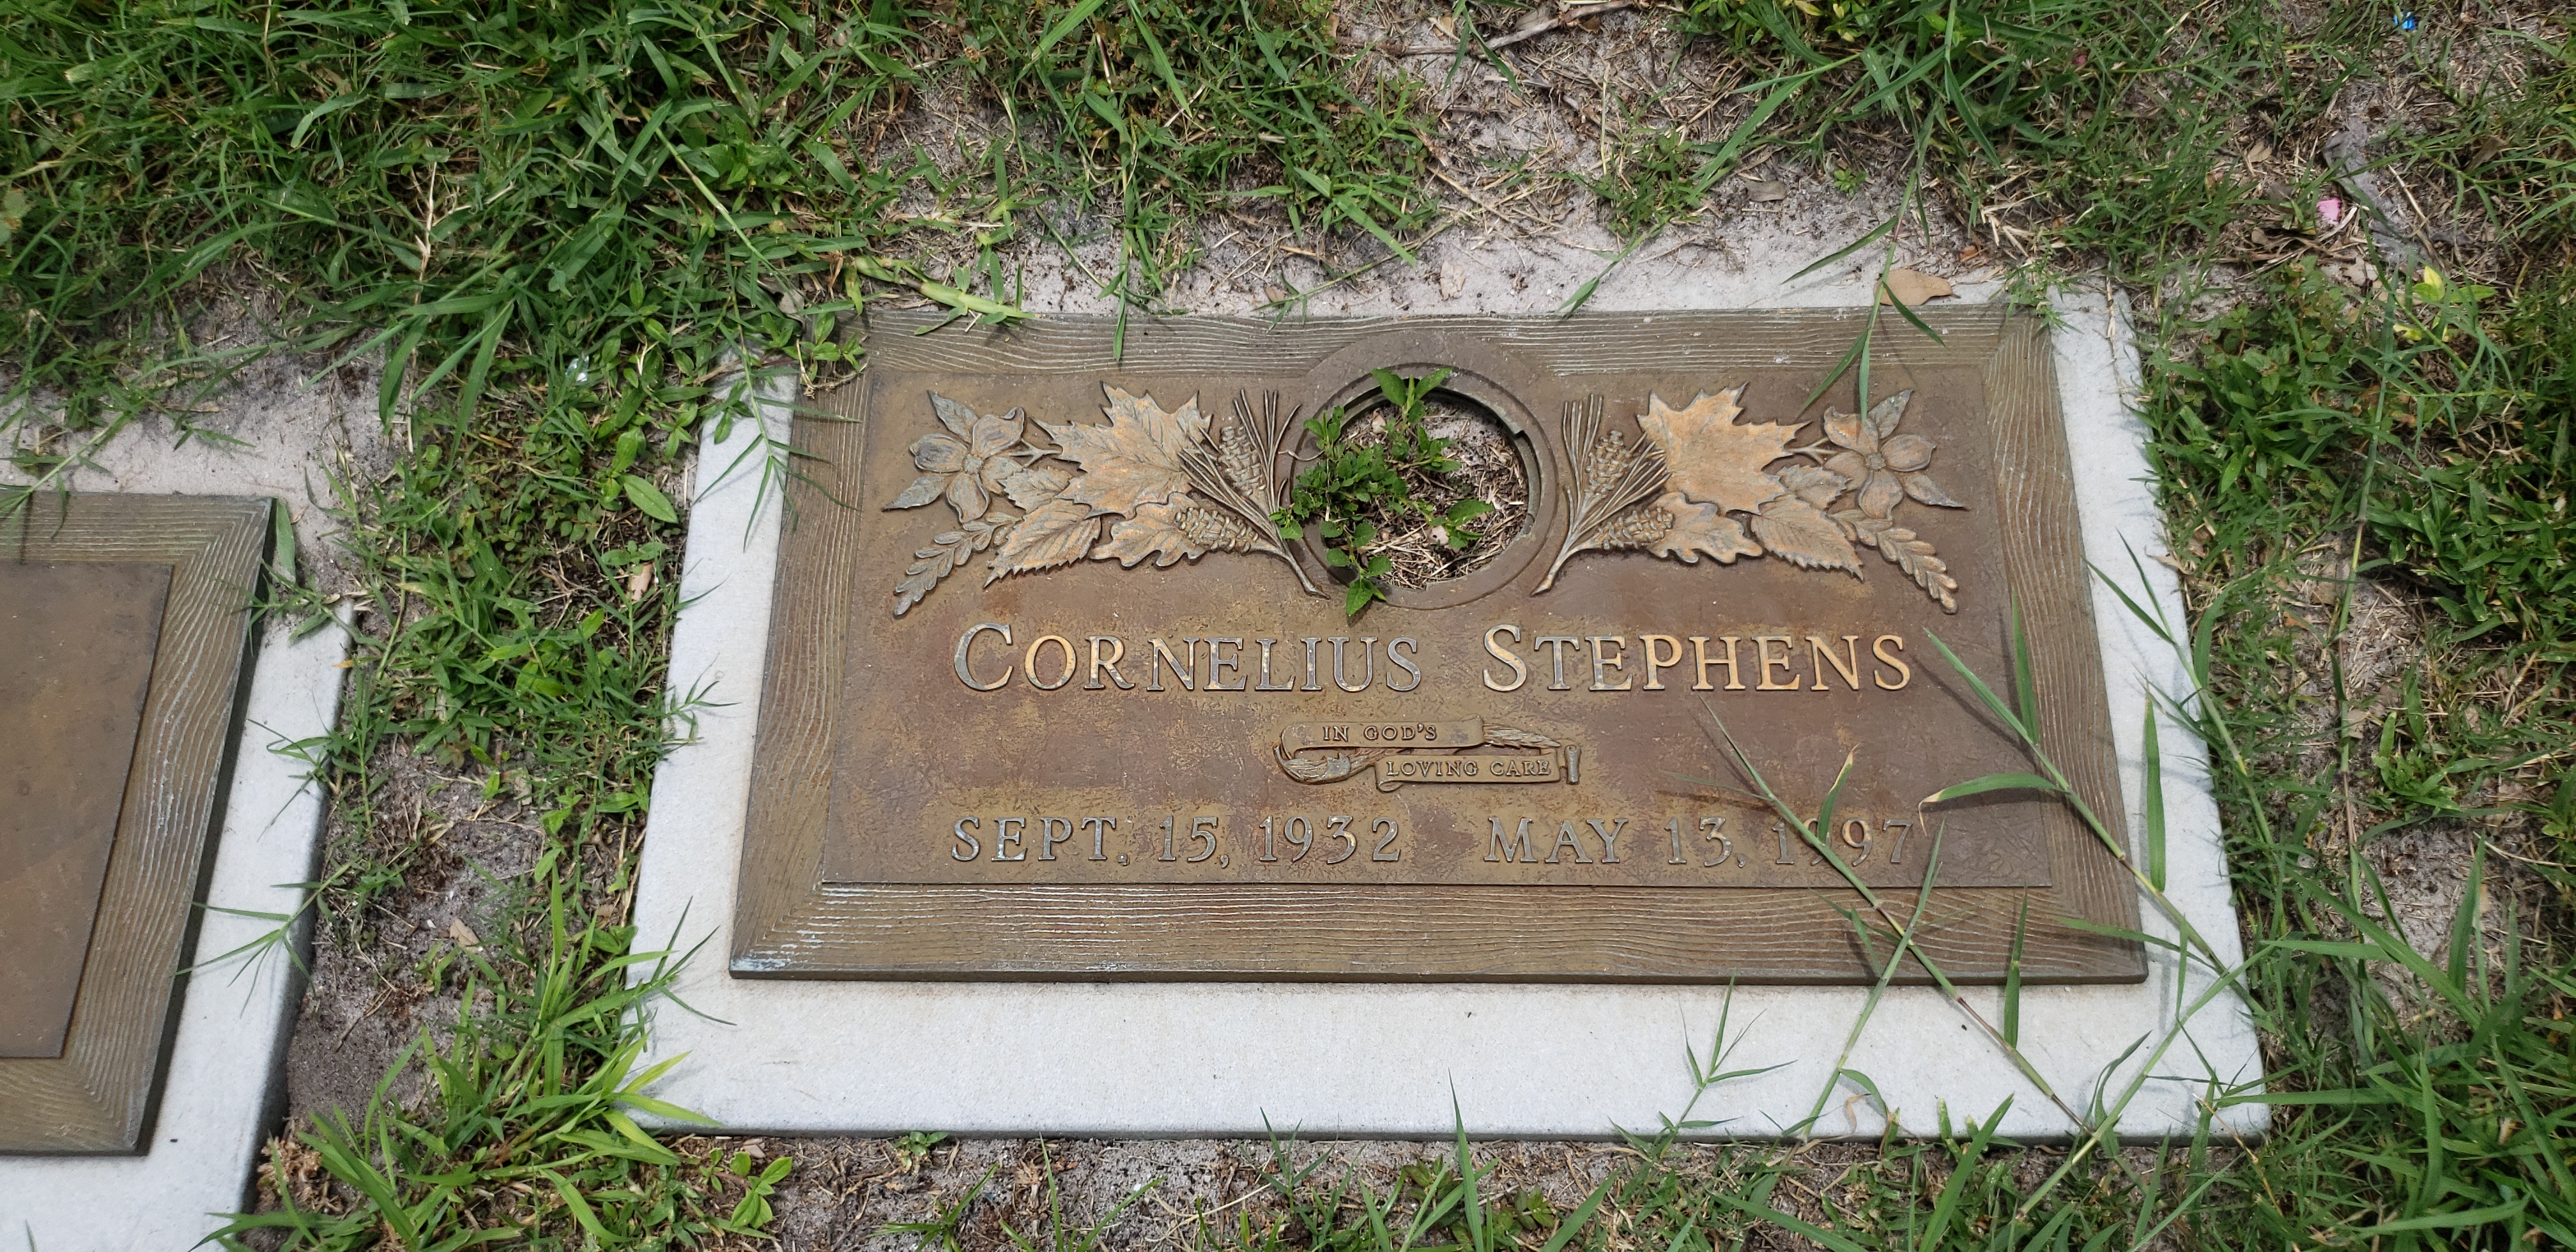 Cornelius Stephens